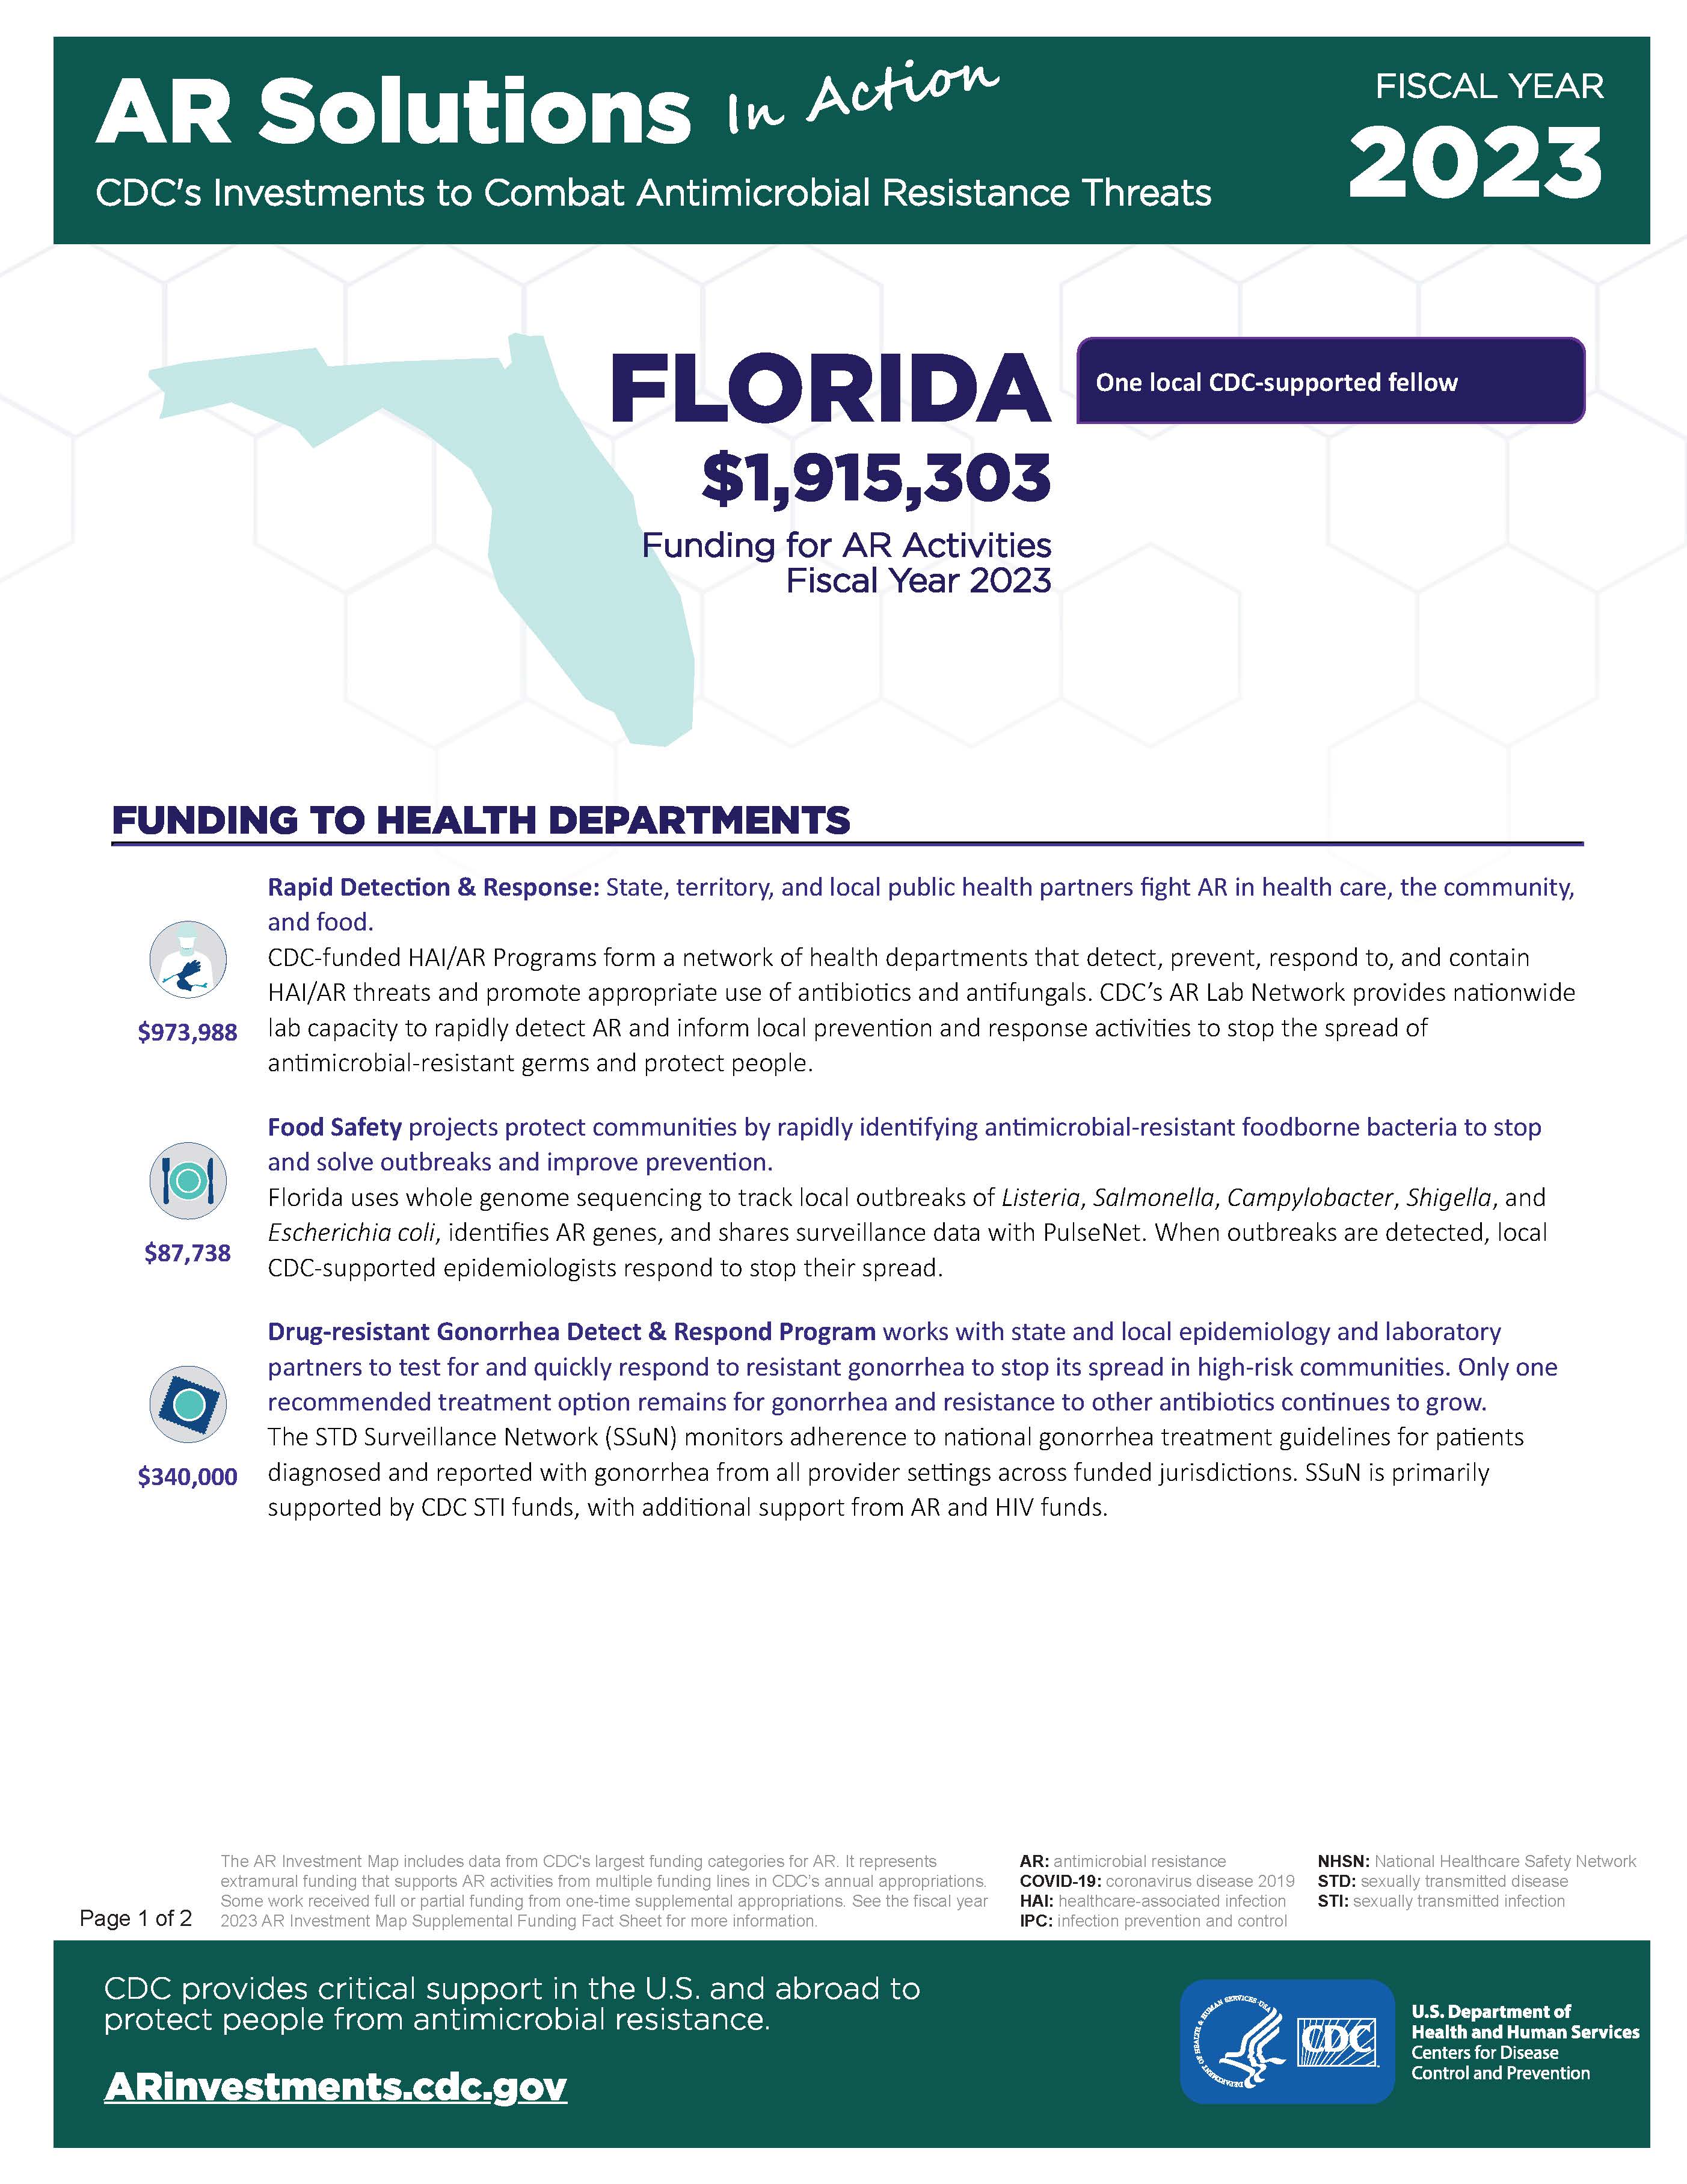 View Factsheet for Florida